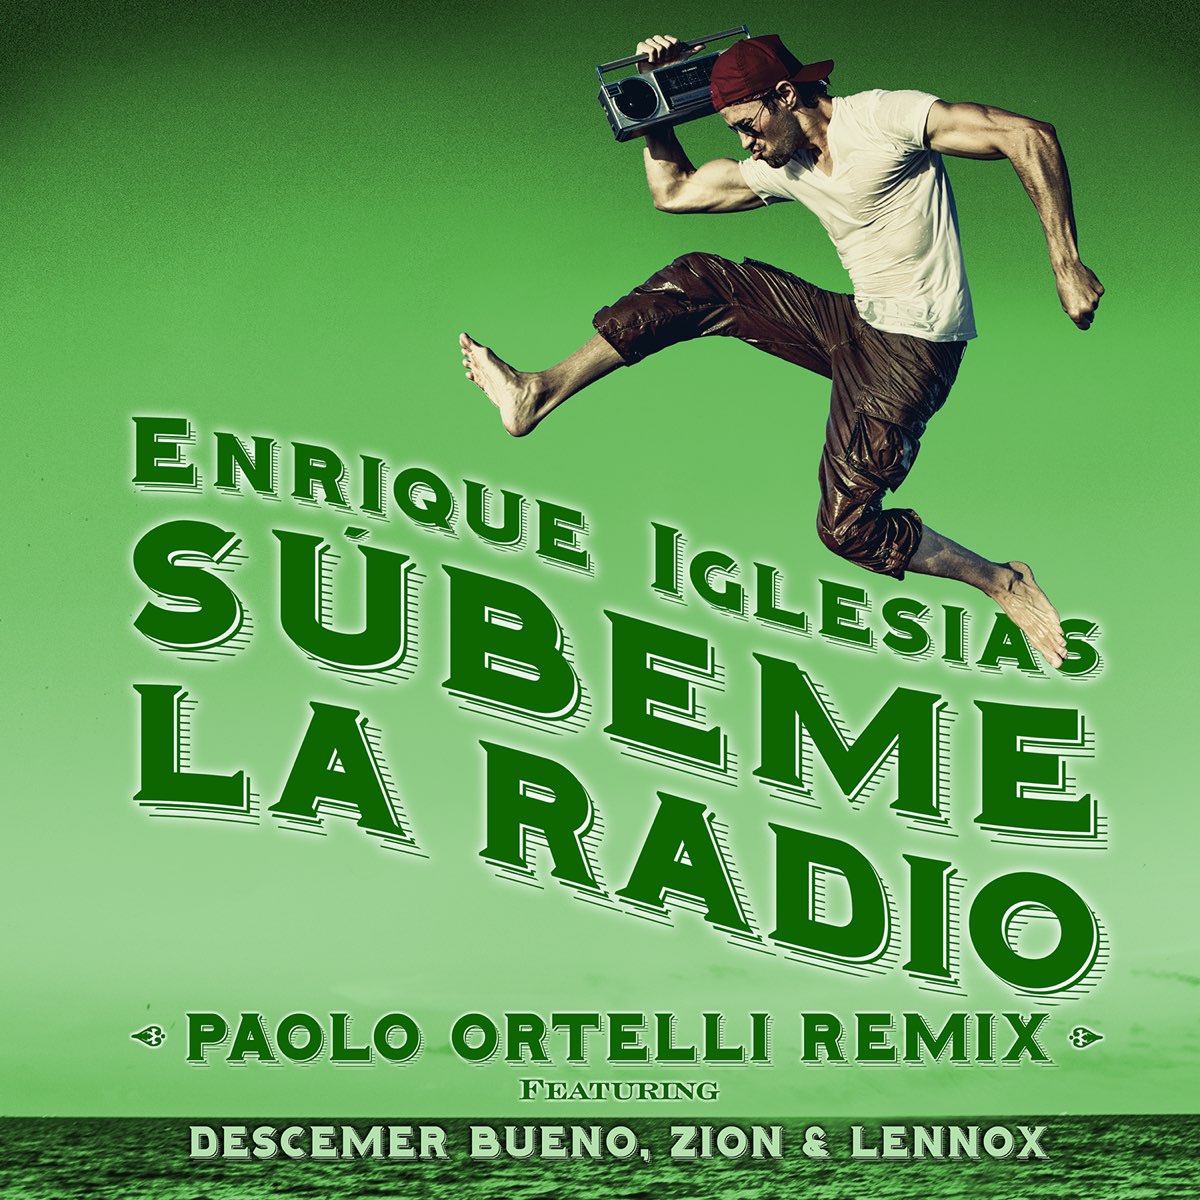 SÚBEME LA RADIO (feat. Descemer Bueno & Zion & Lennox) [Paolo Ortelli  Remix] - Single by Enrique Iglesias on Apple Music